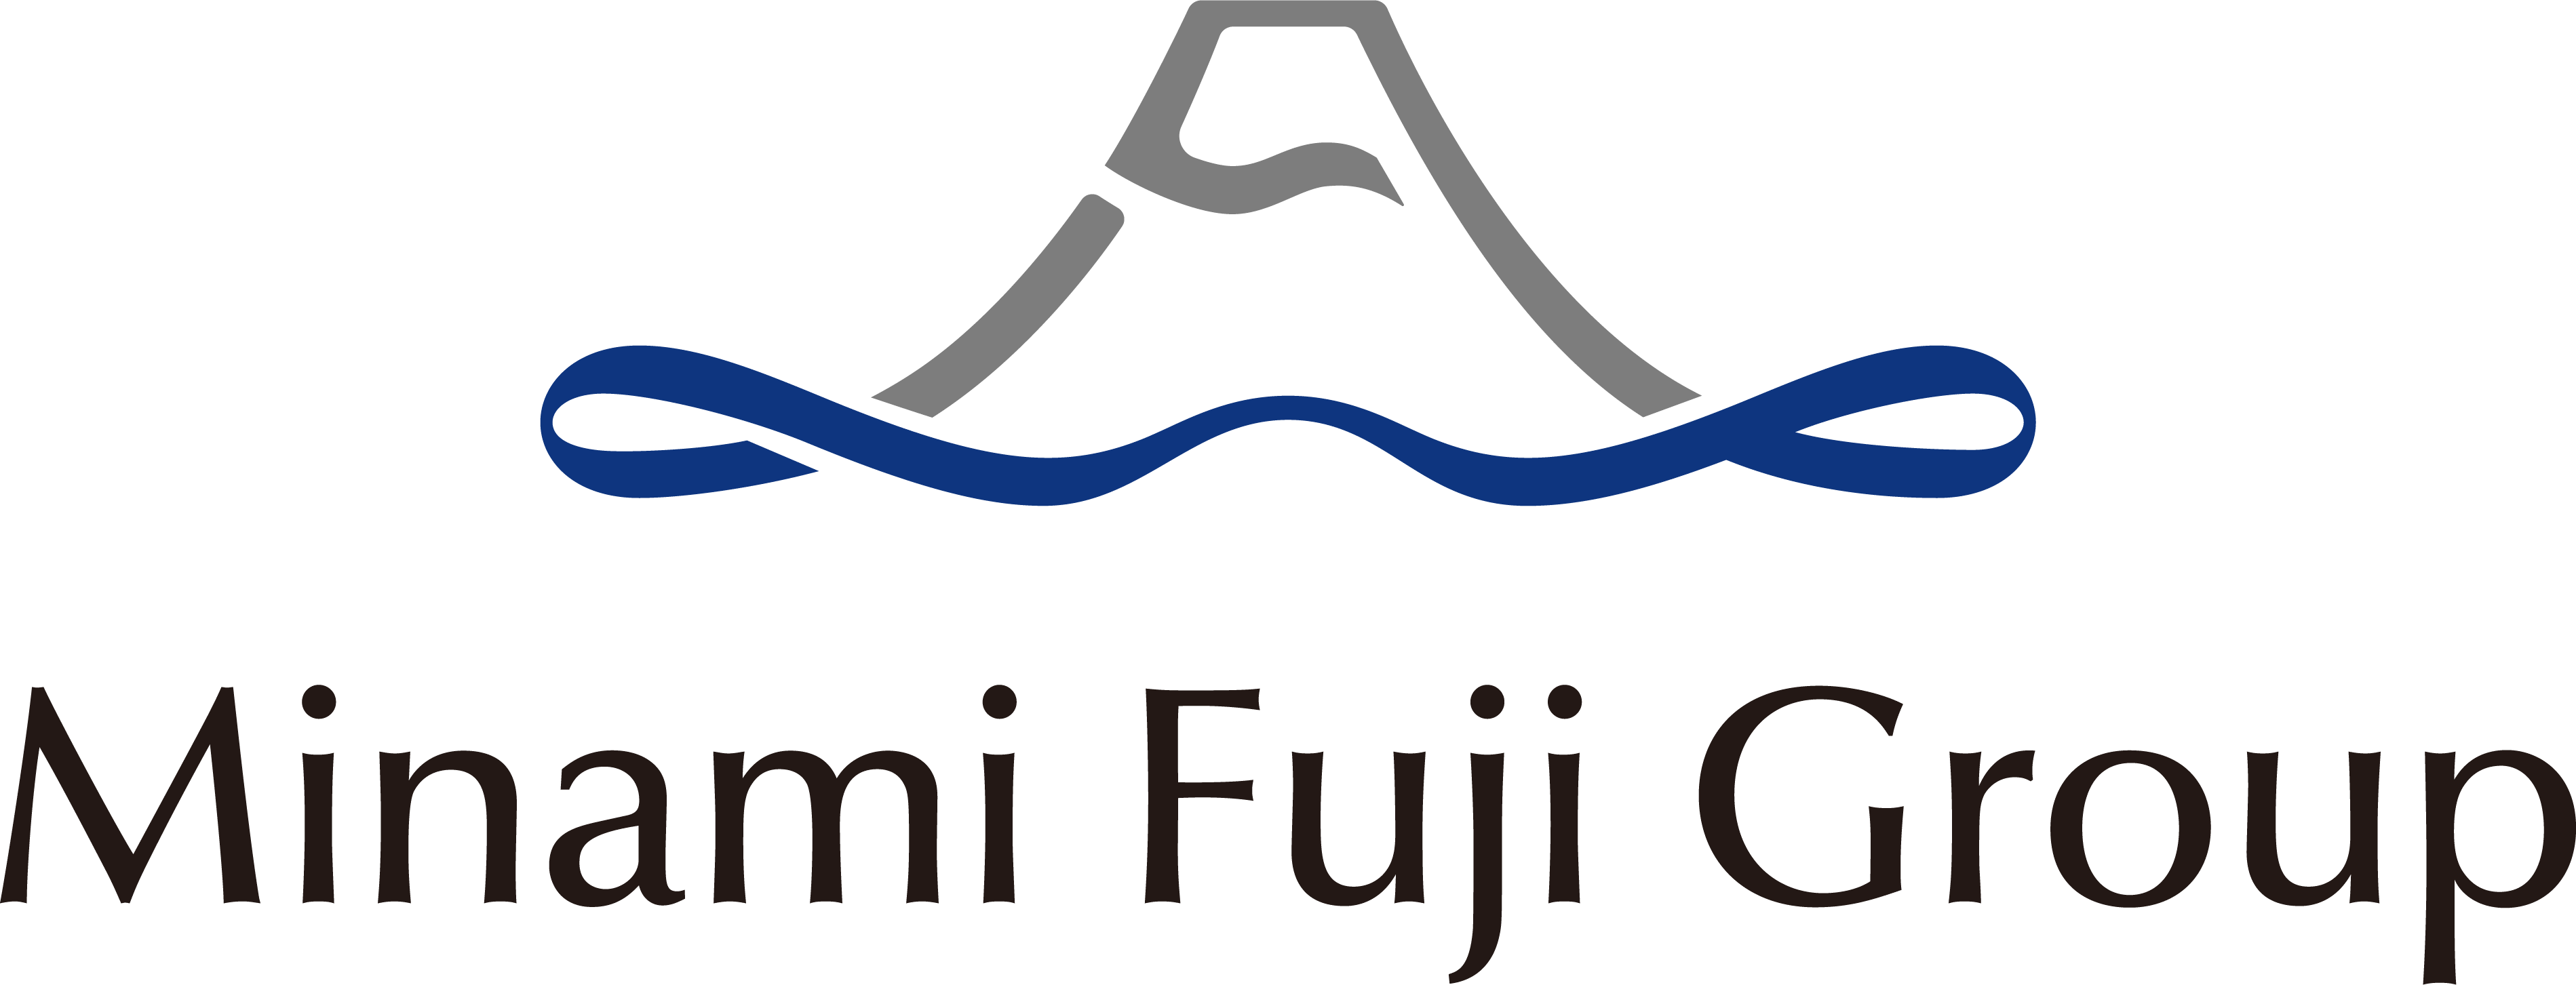 Minami Fuji Group